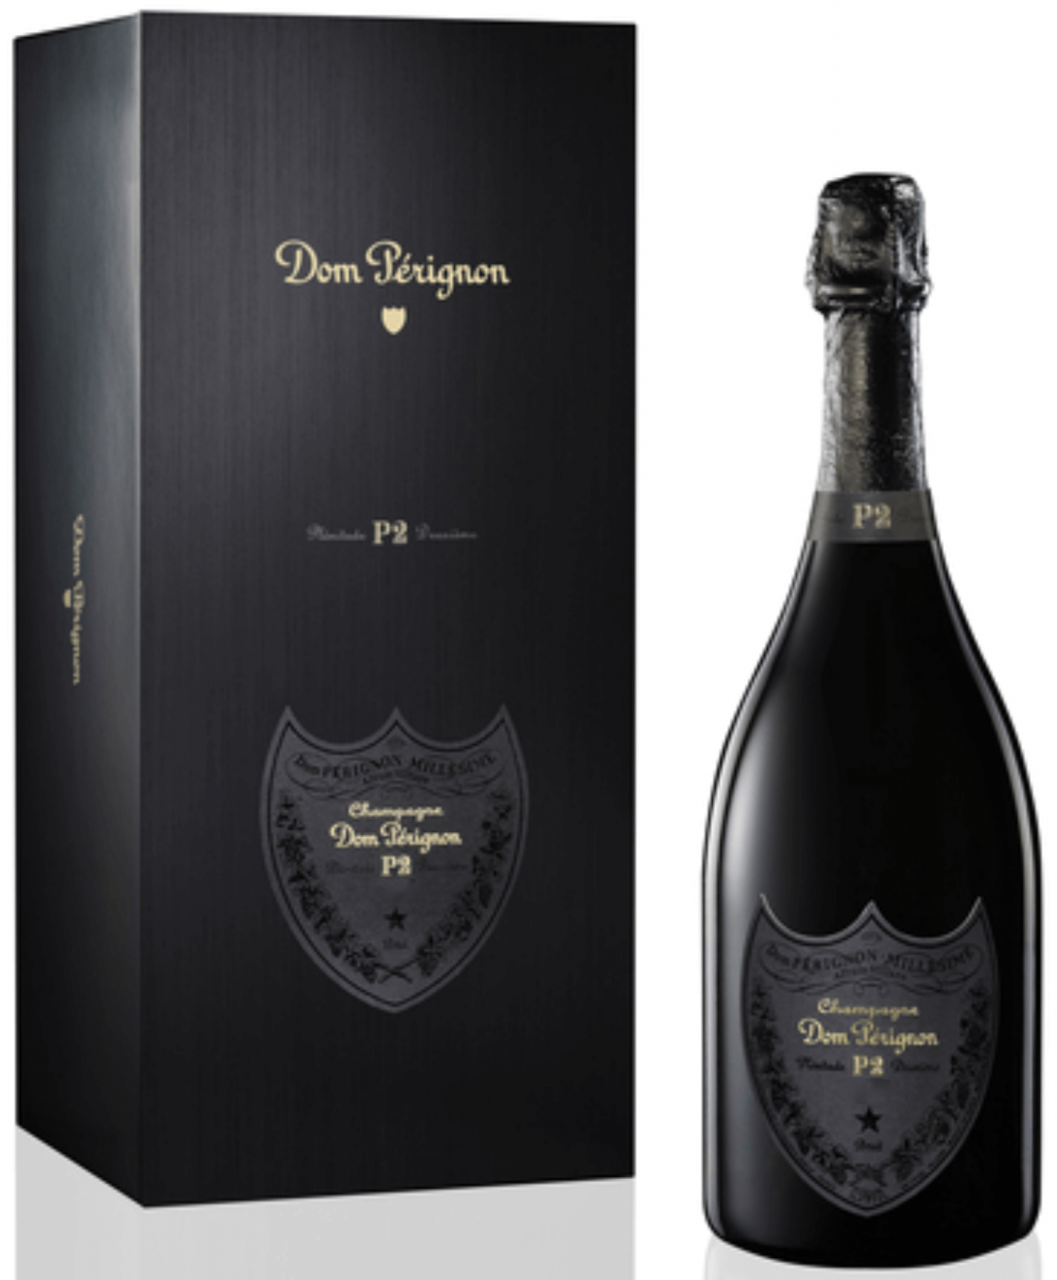 Dom Perignon P2 Vintage 2004 Champagner in Geschenkverpackung 0,75 Liter